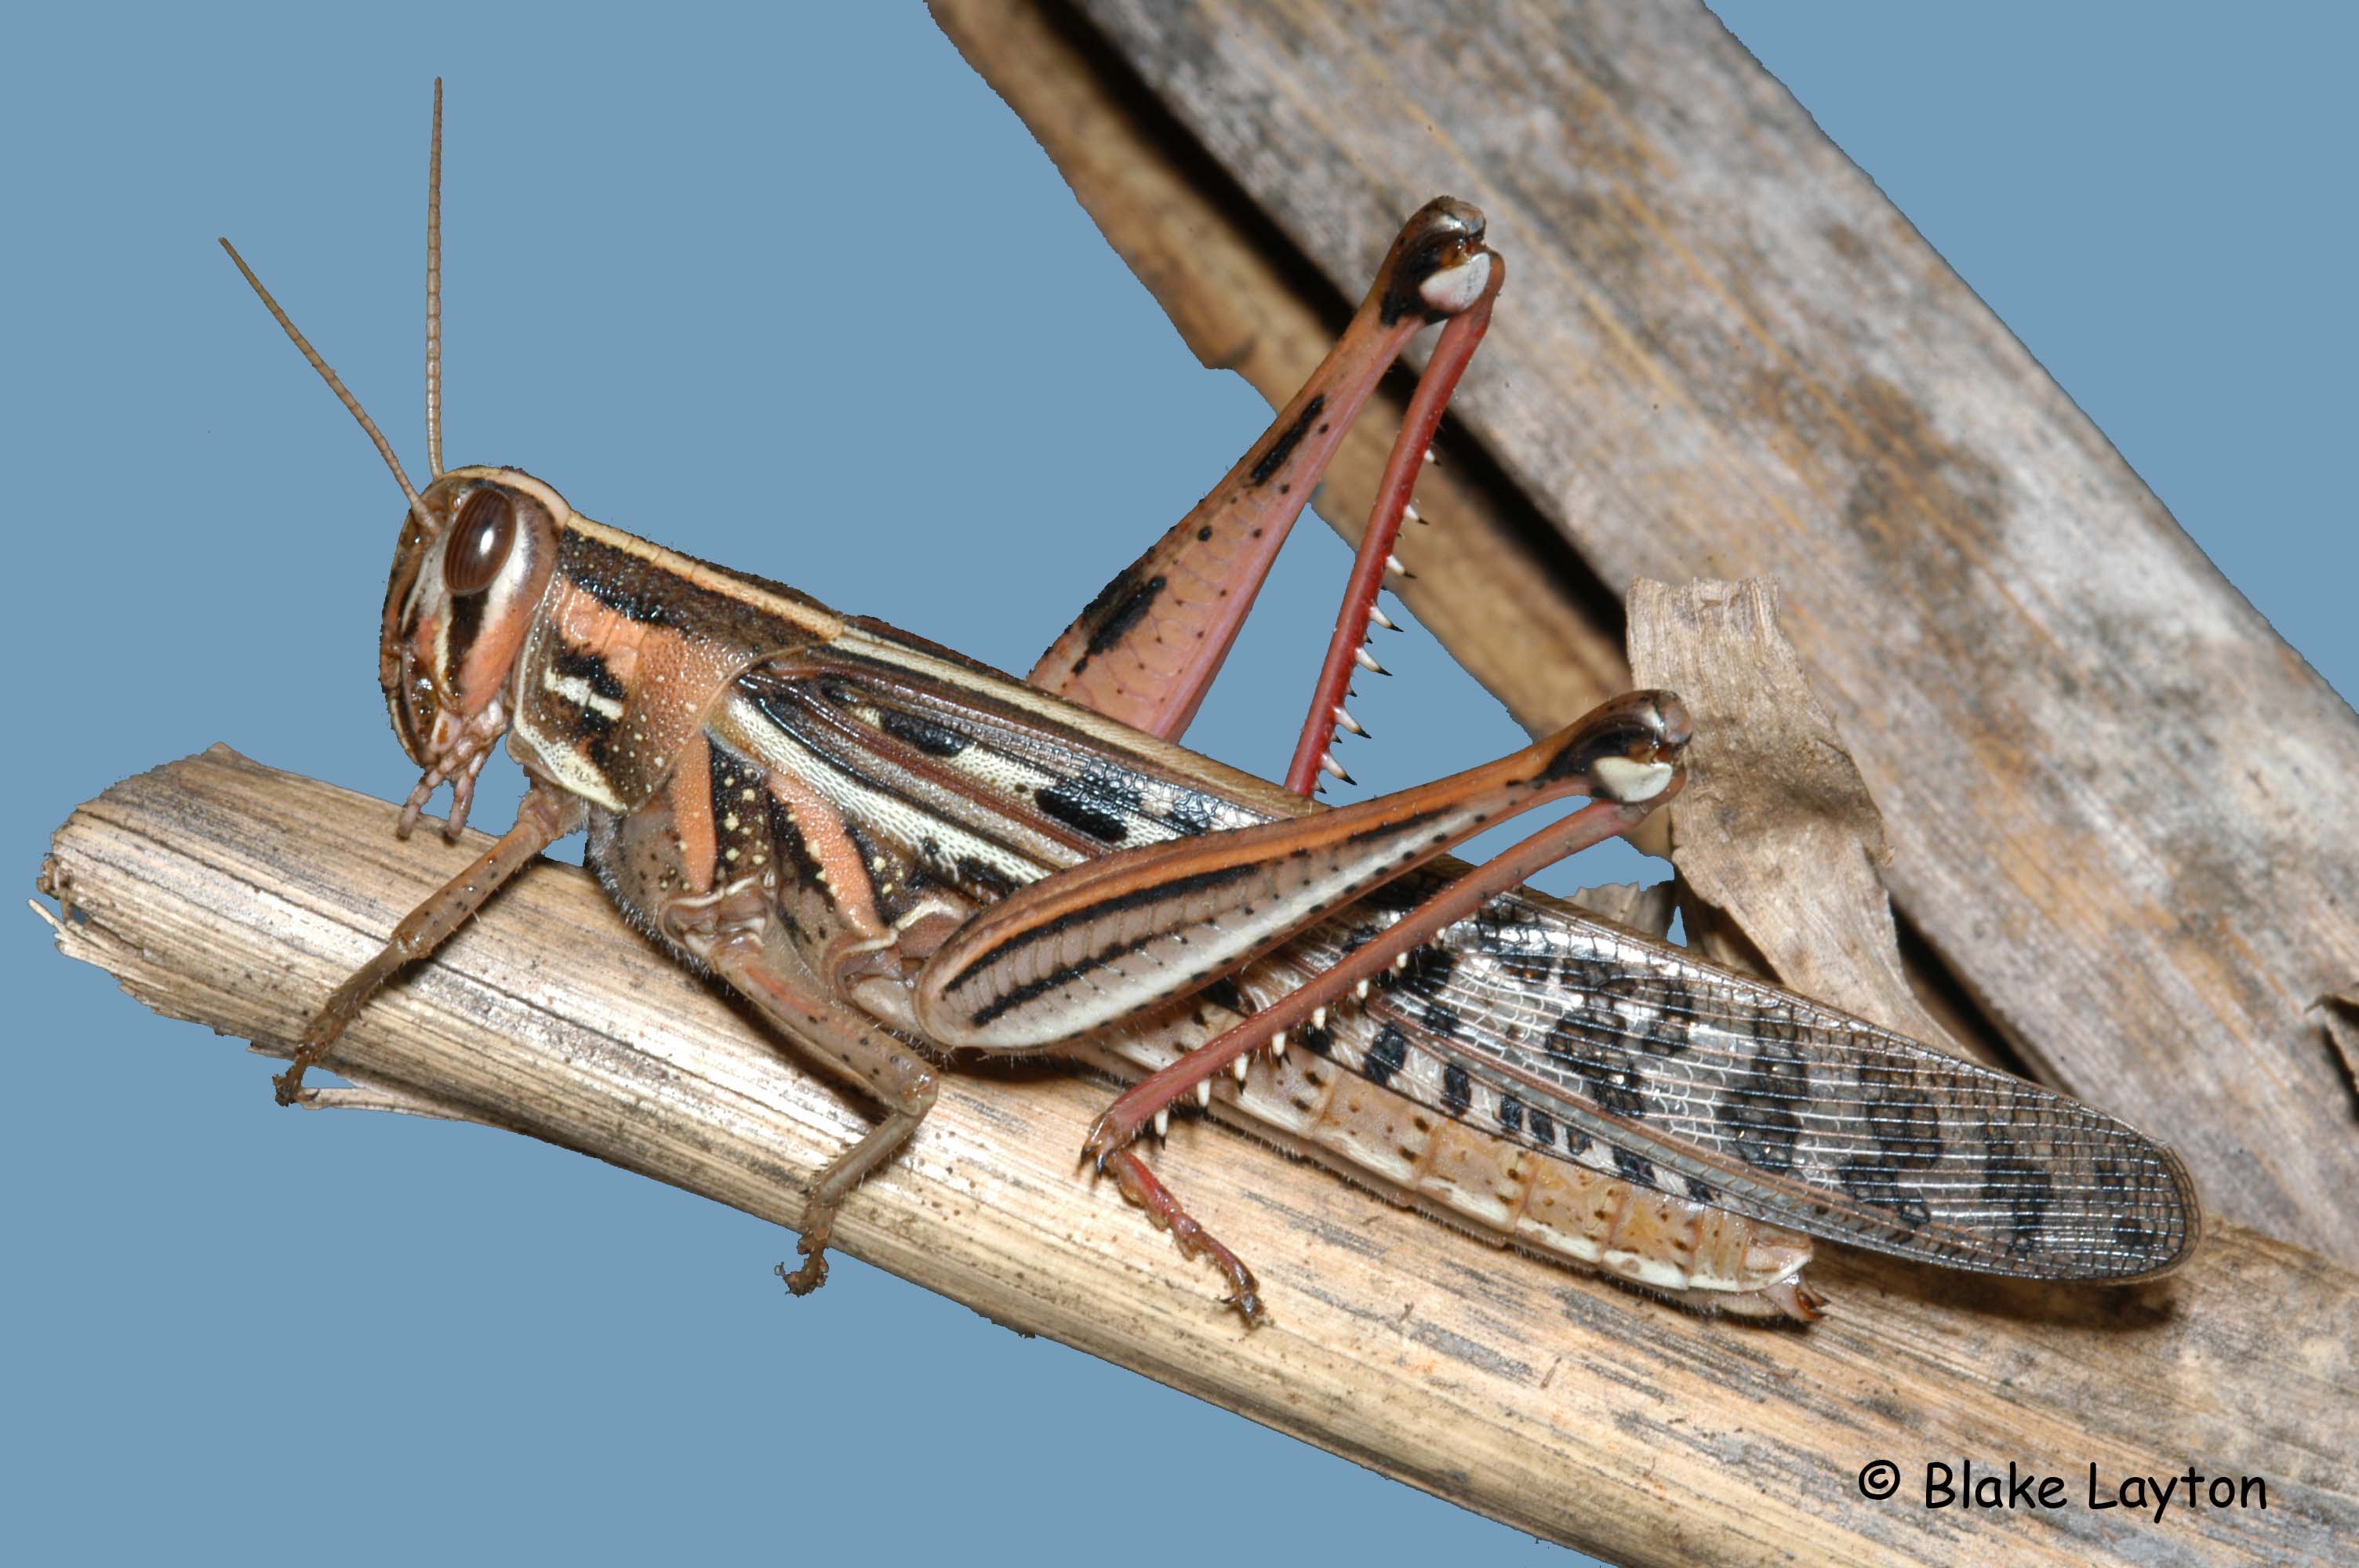 Close up of a grasshopper on a tree limb.